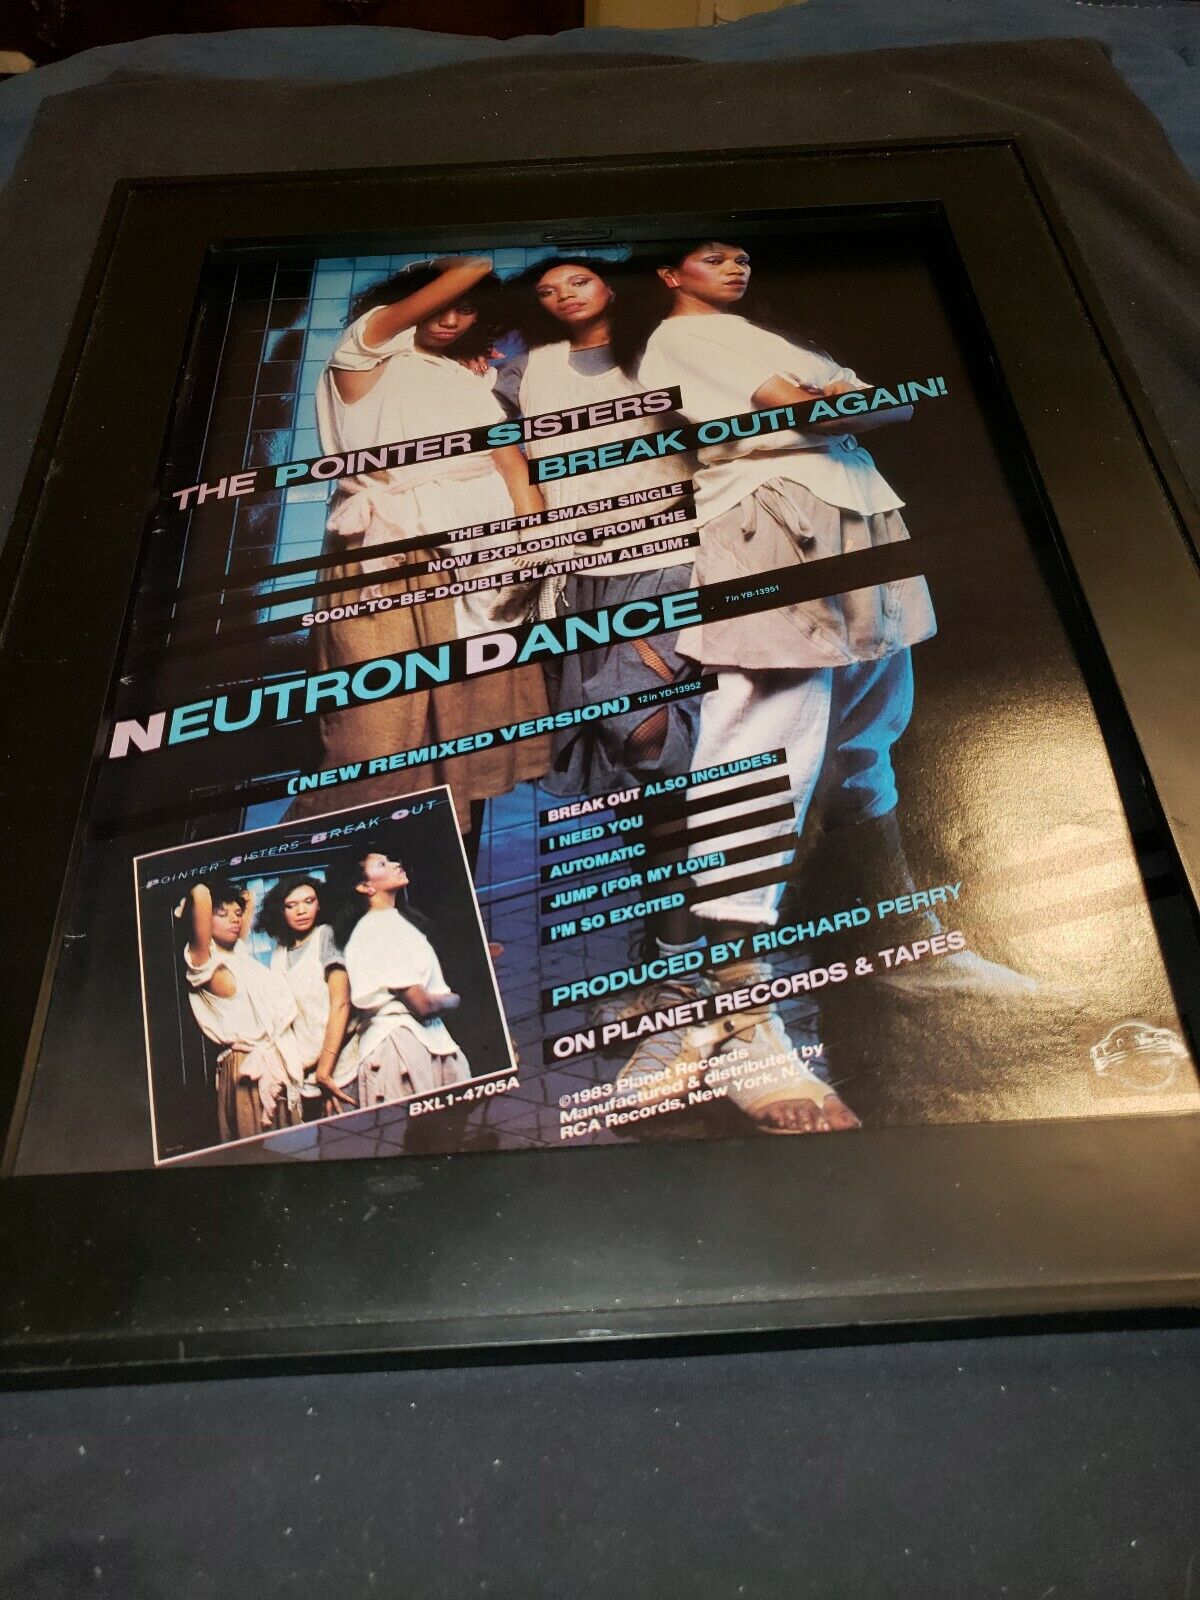 Pointer Sisters Neutron Dance Rare Original Promo Poster Ad Framed!